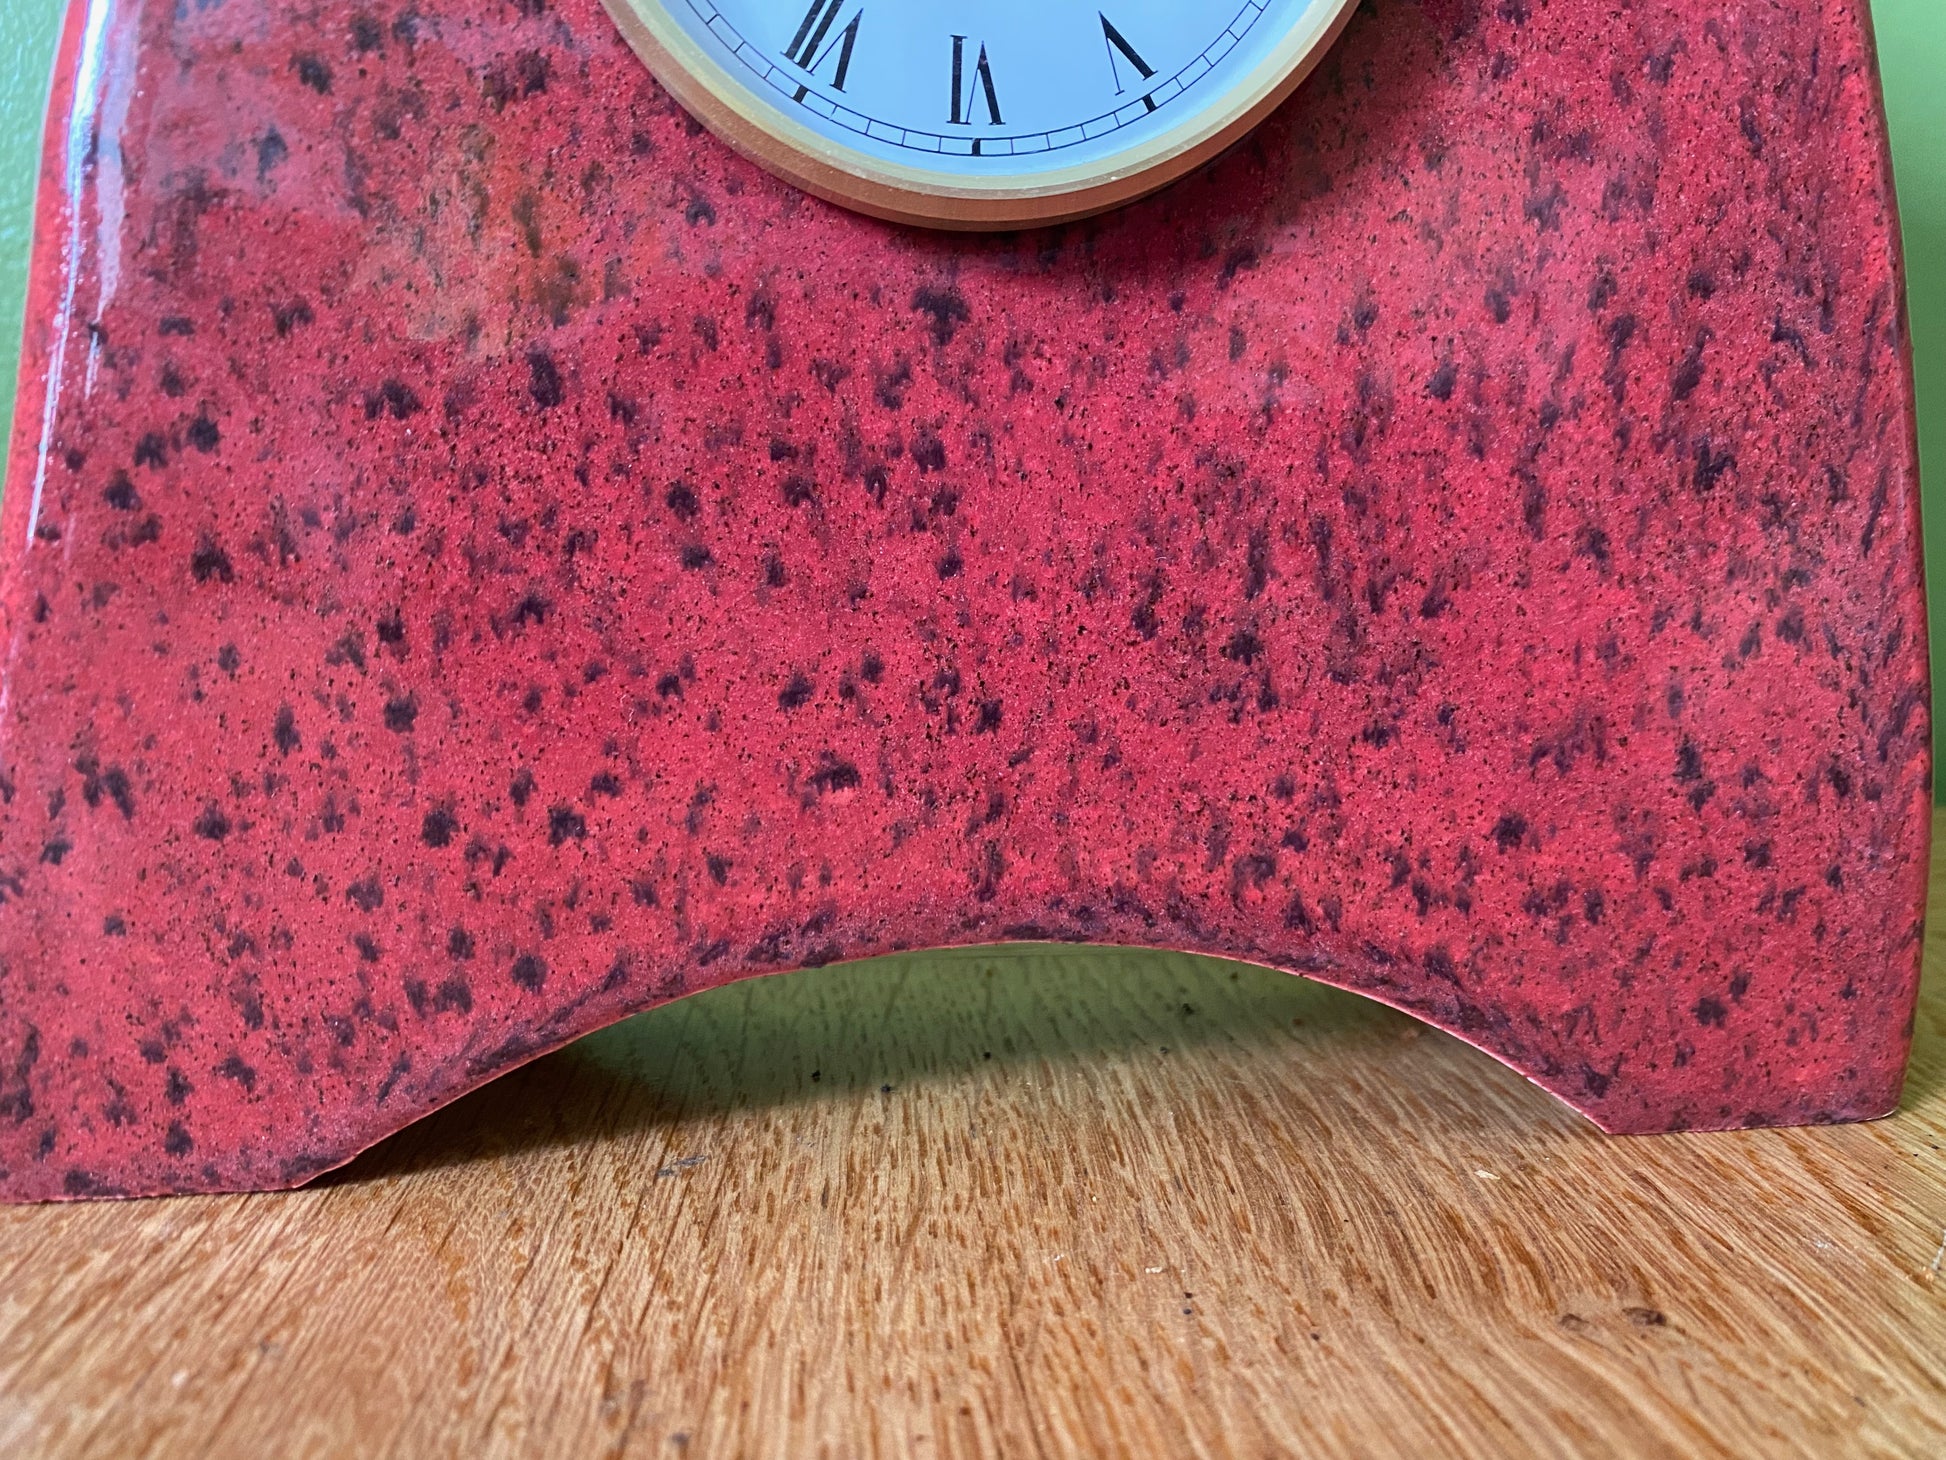 Red Speckle Glaze Detail